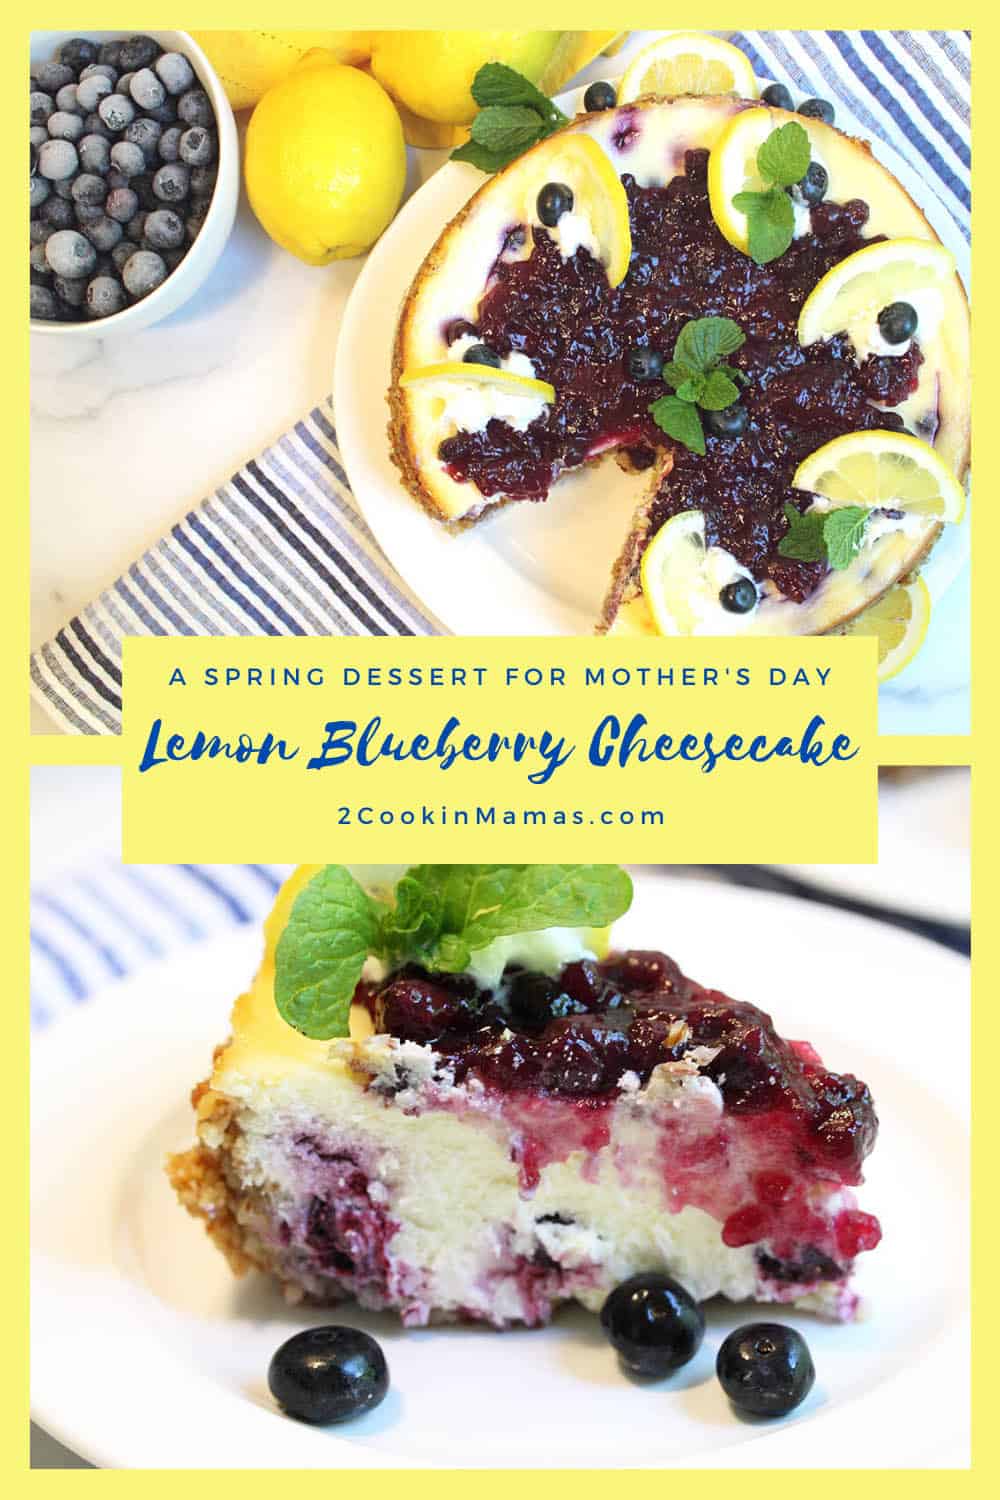 Lemon Blueberry Cheesecake with Almond Crust